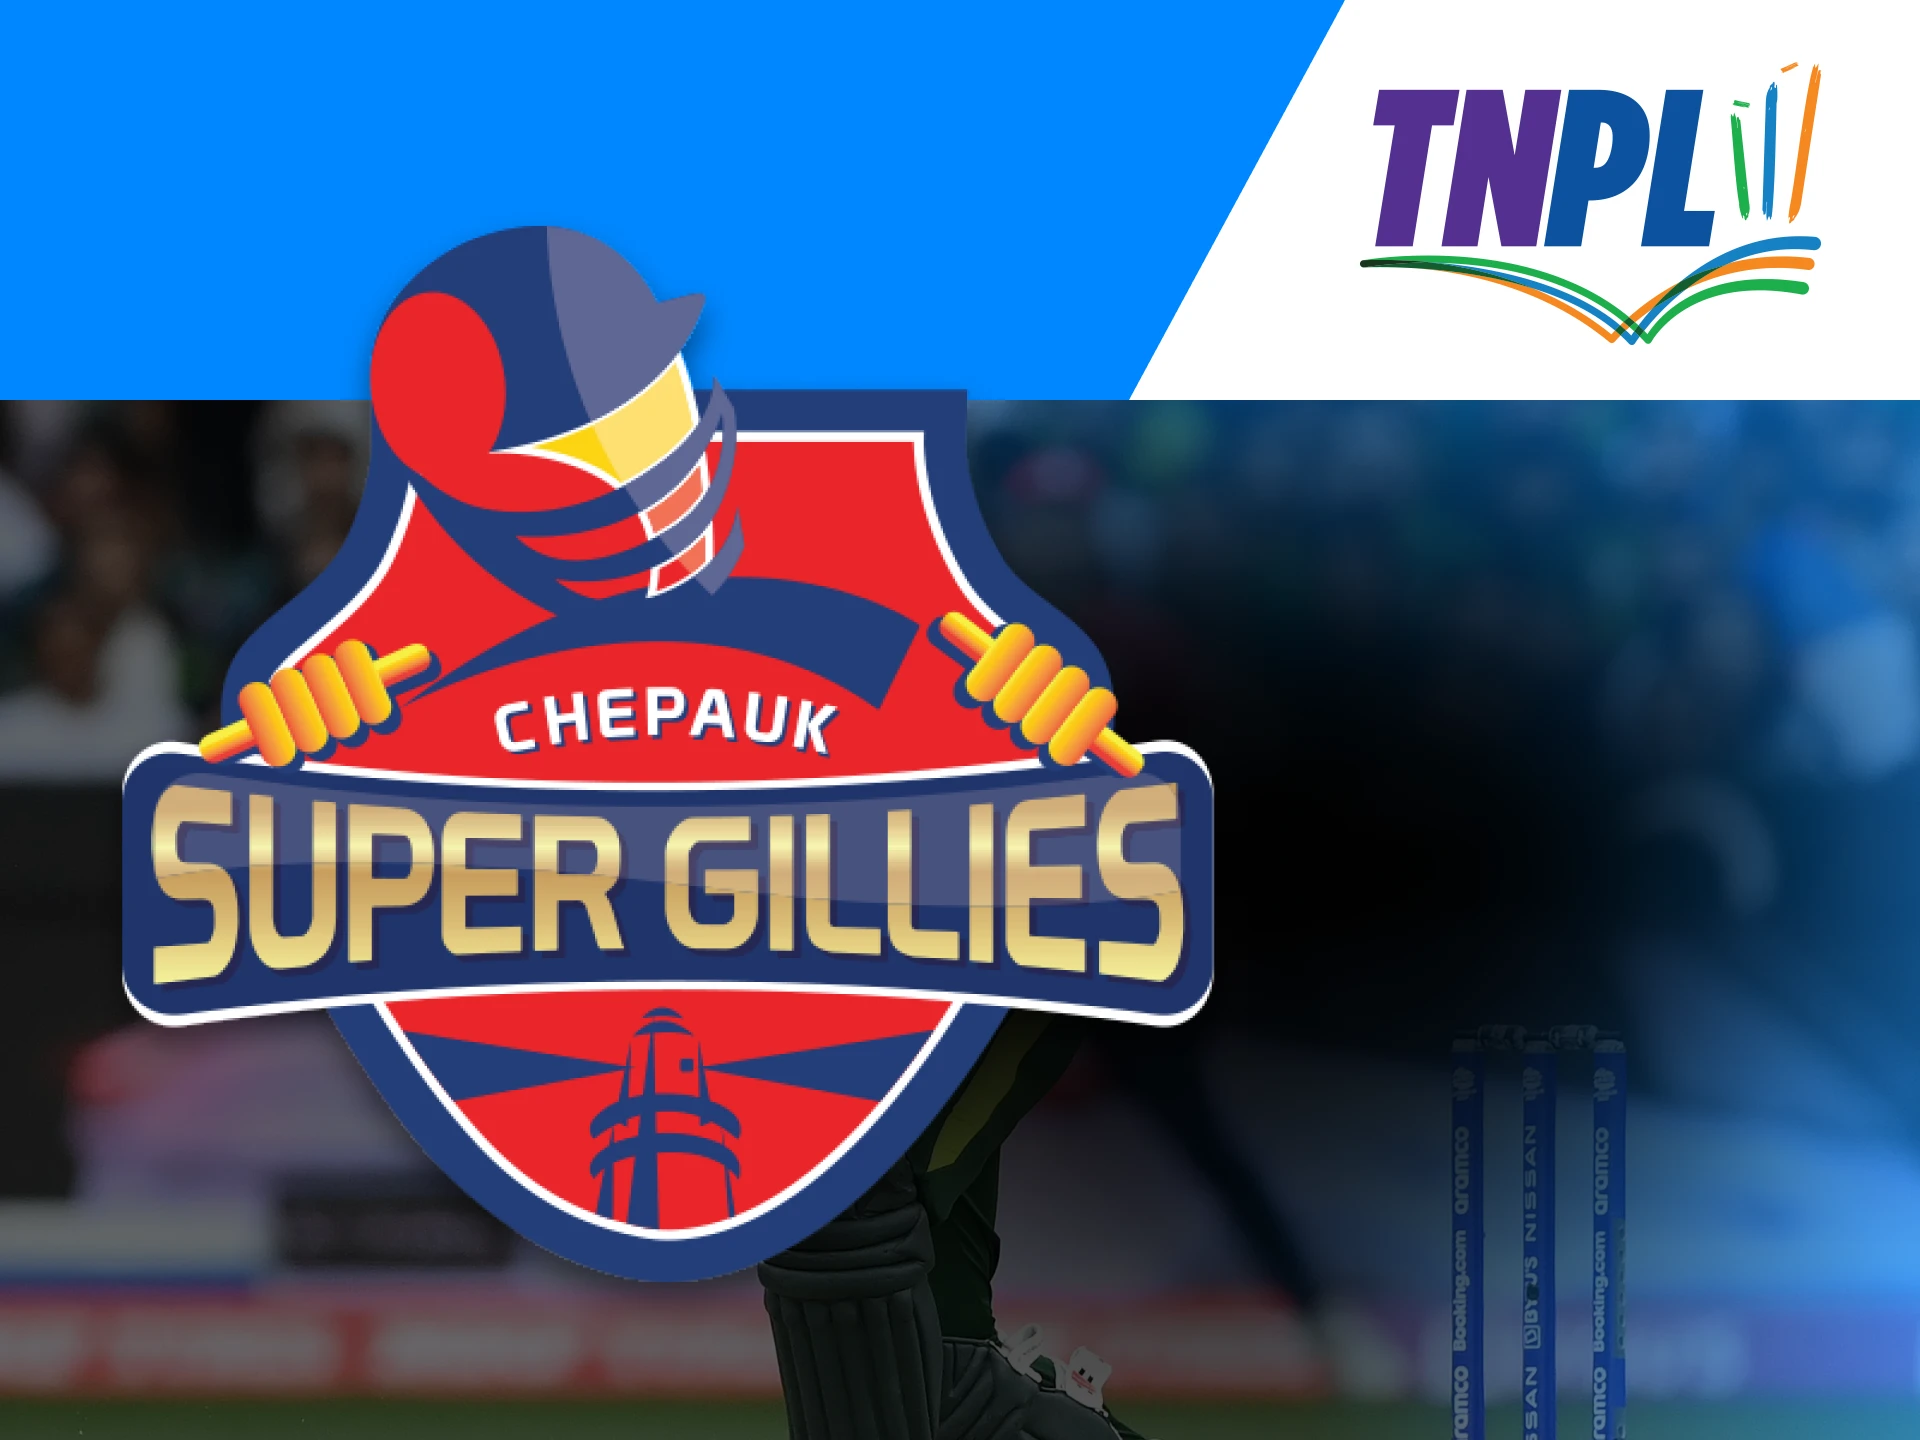 The Chepauk Super Gillies Team has already won the TNPL twice.